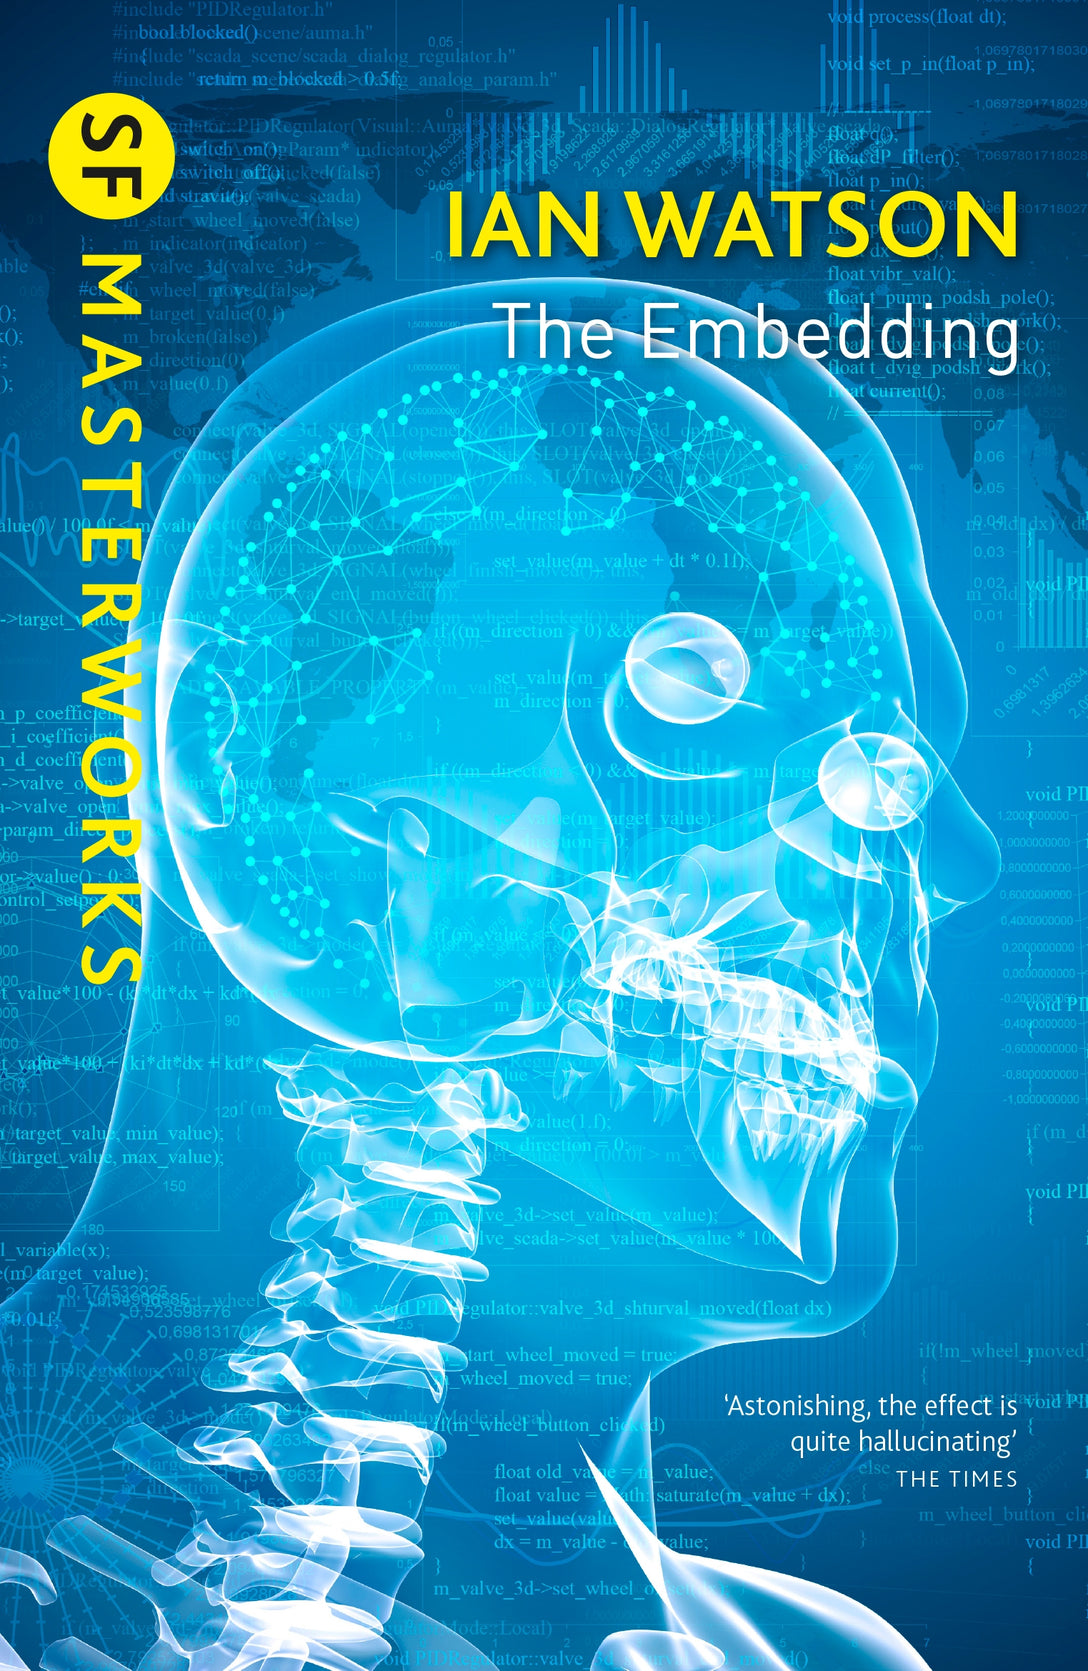 The Embedding by Ian Watson